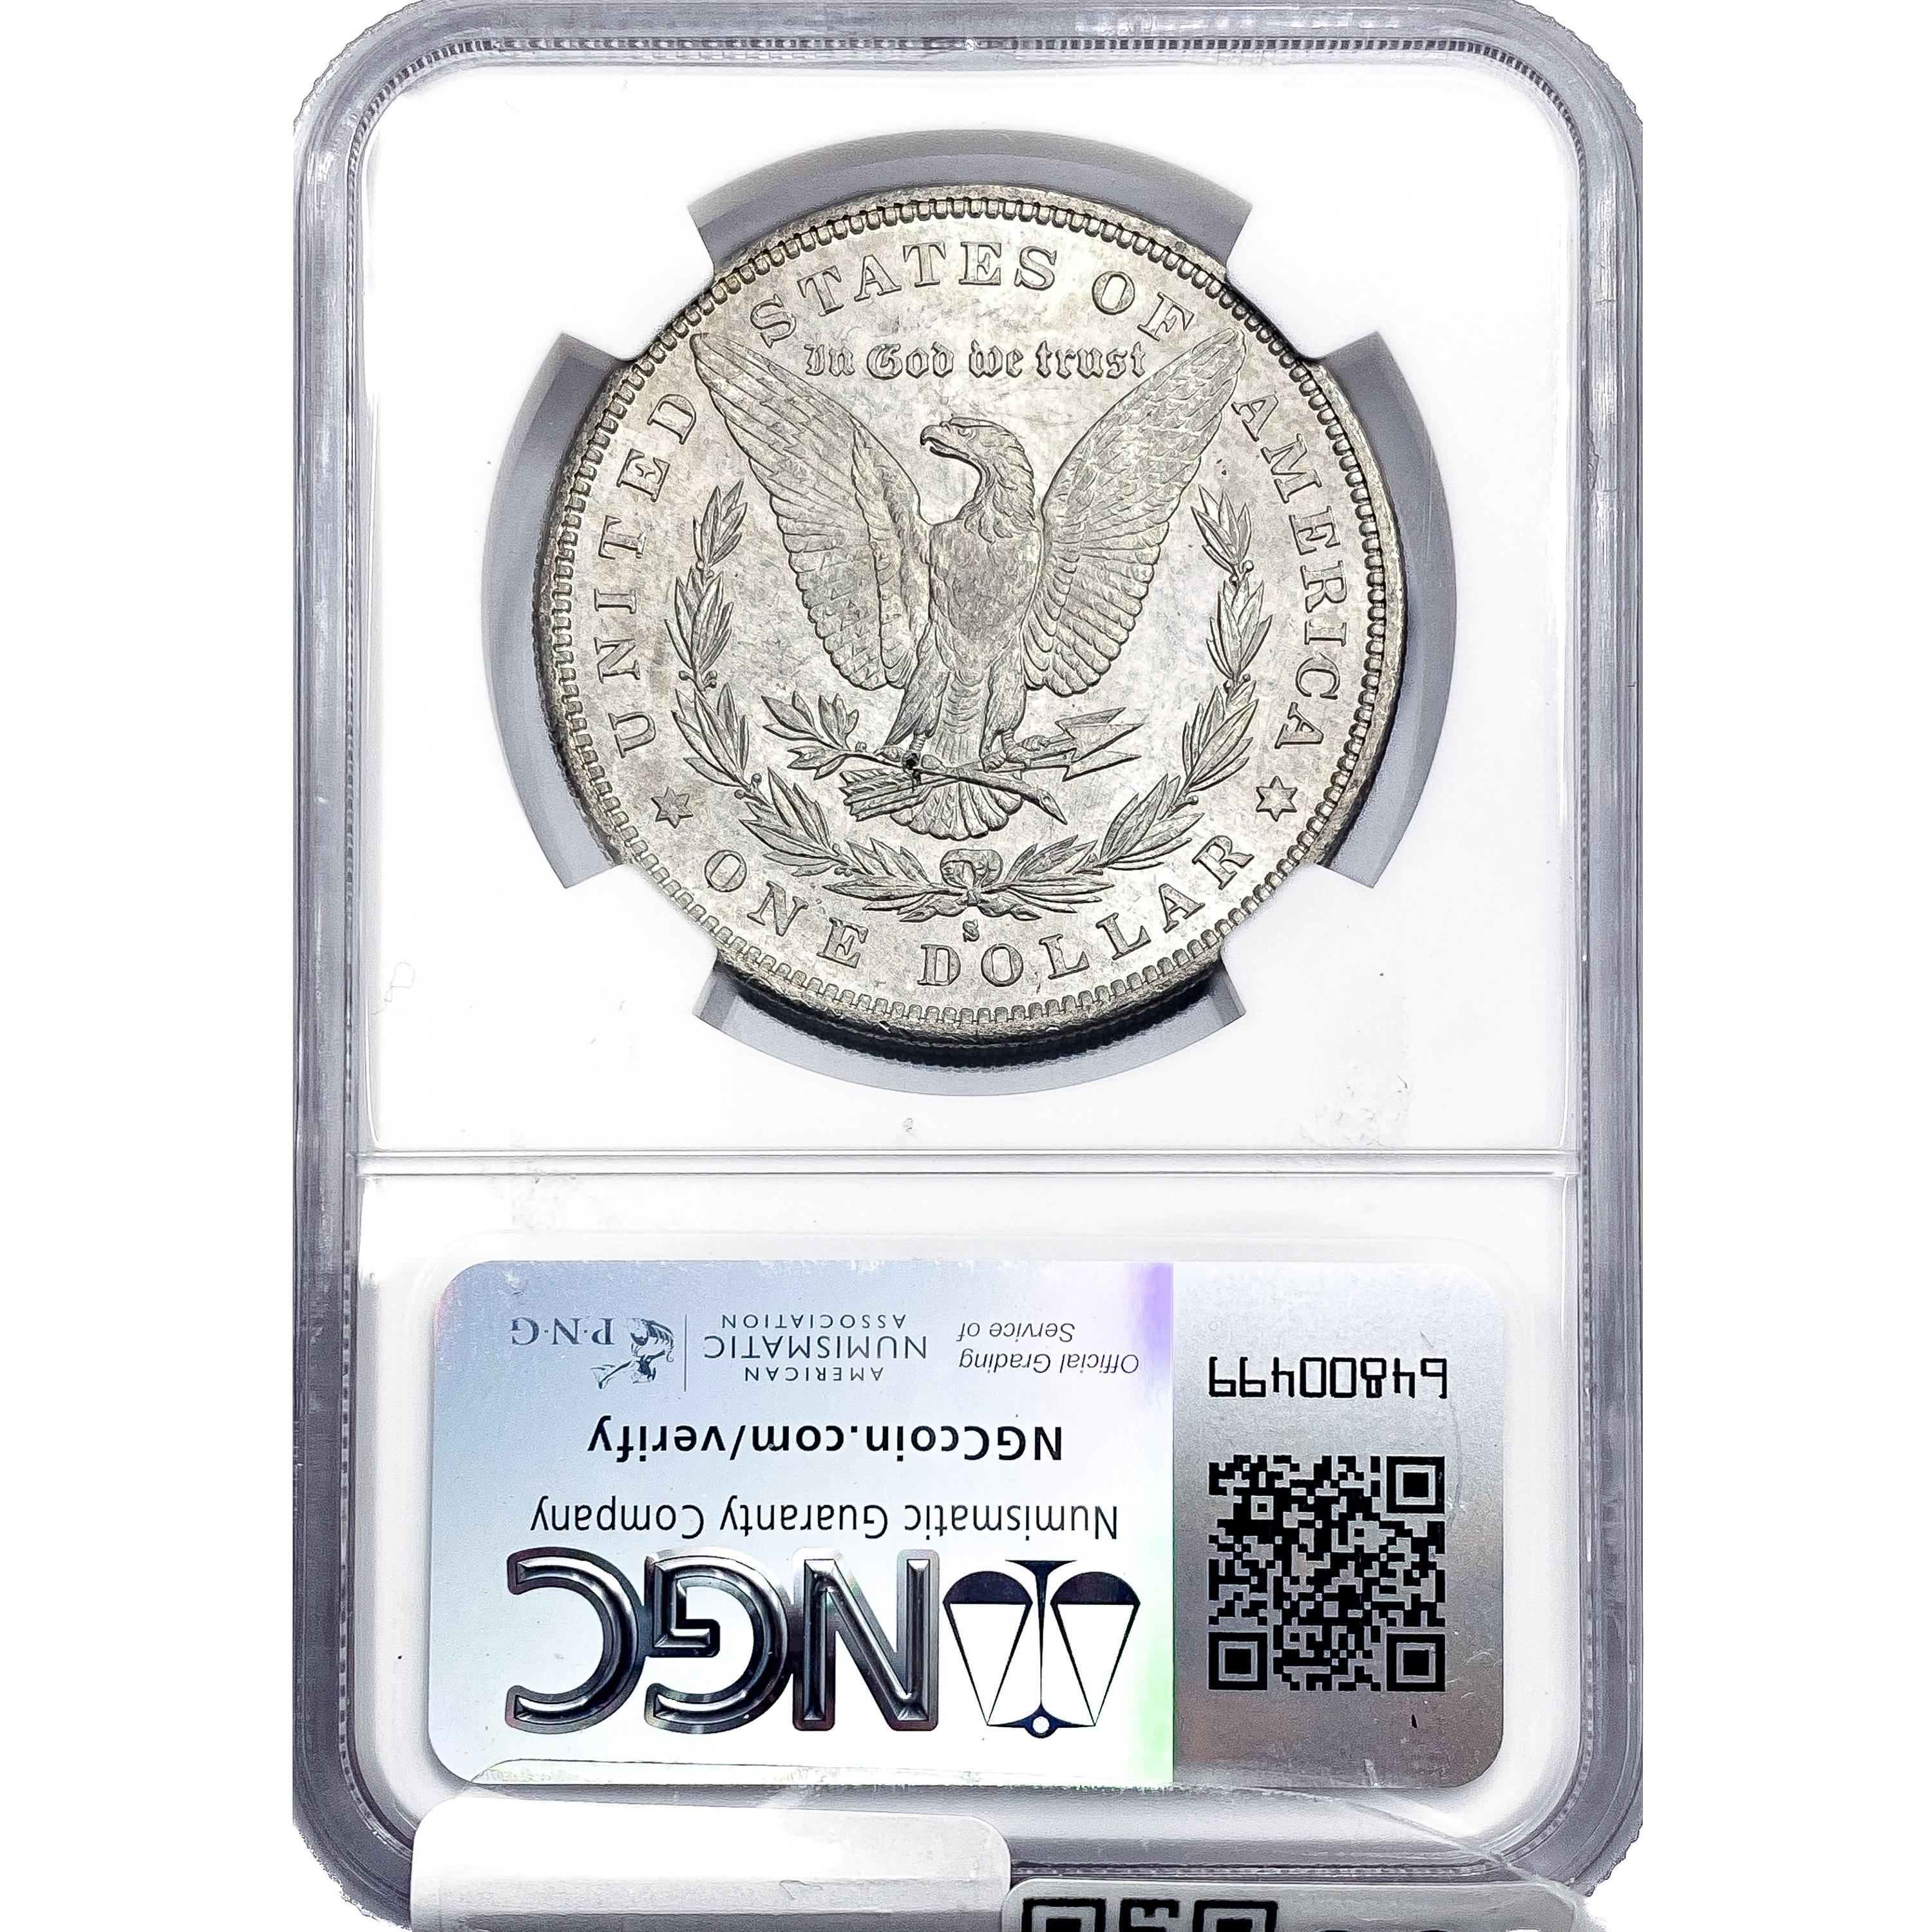 1879-S Morgan Silver Dollar NGC MS67